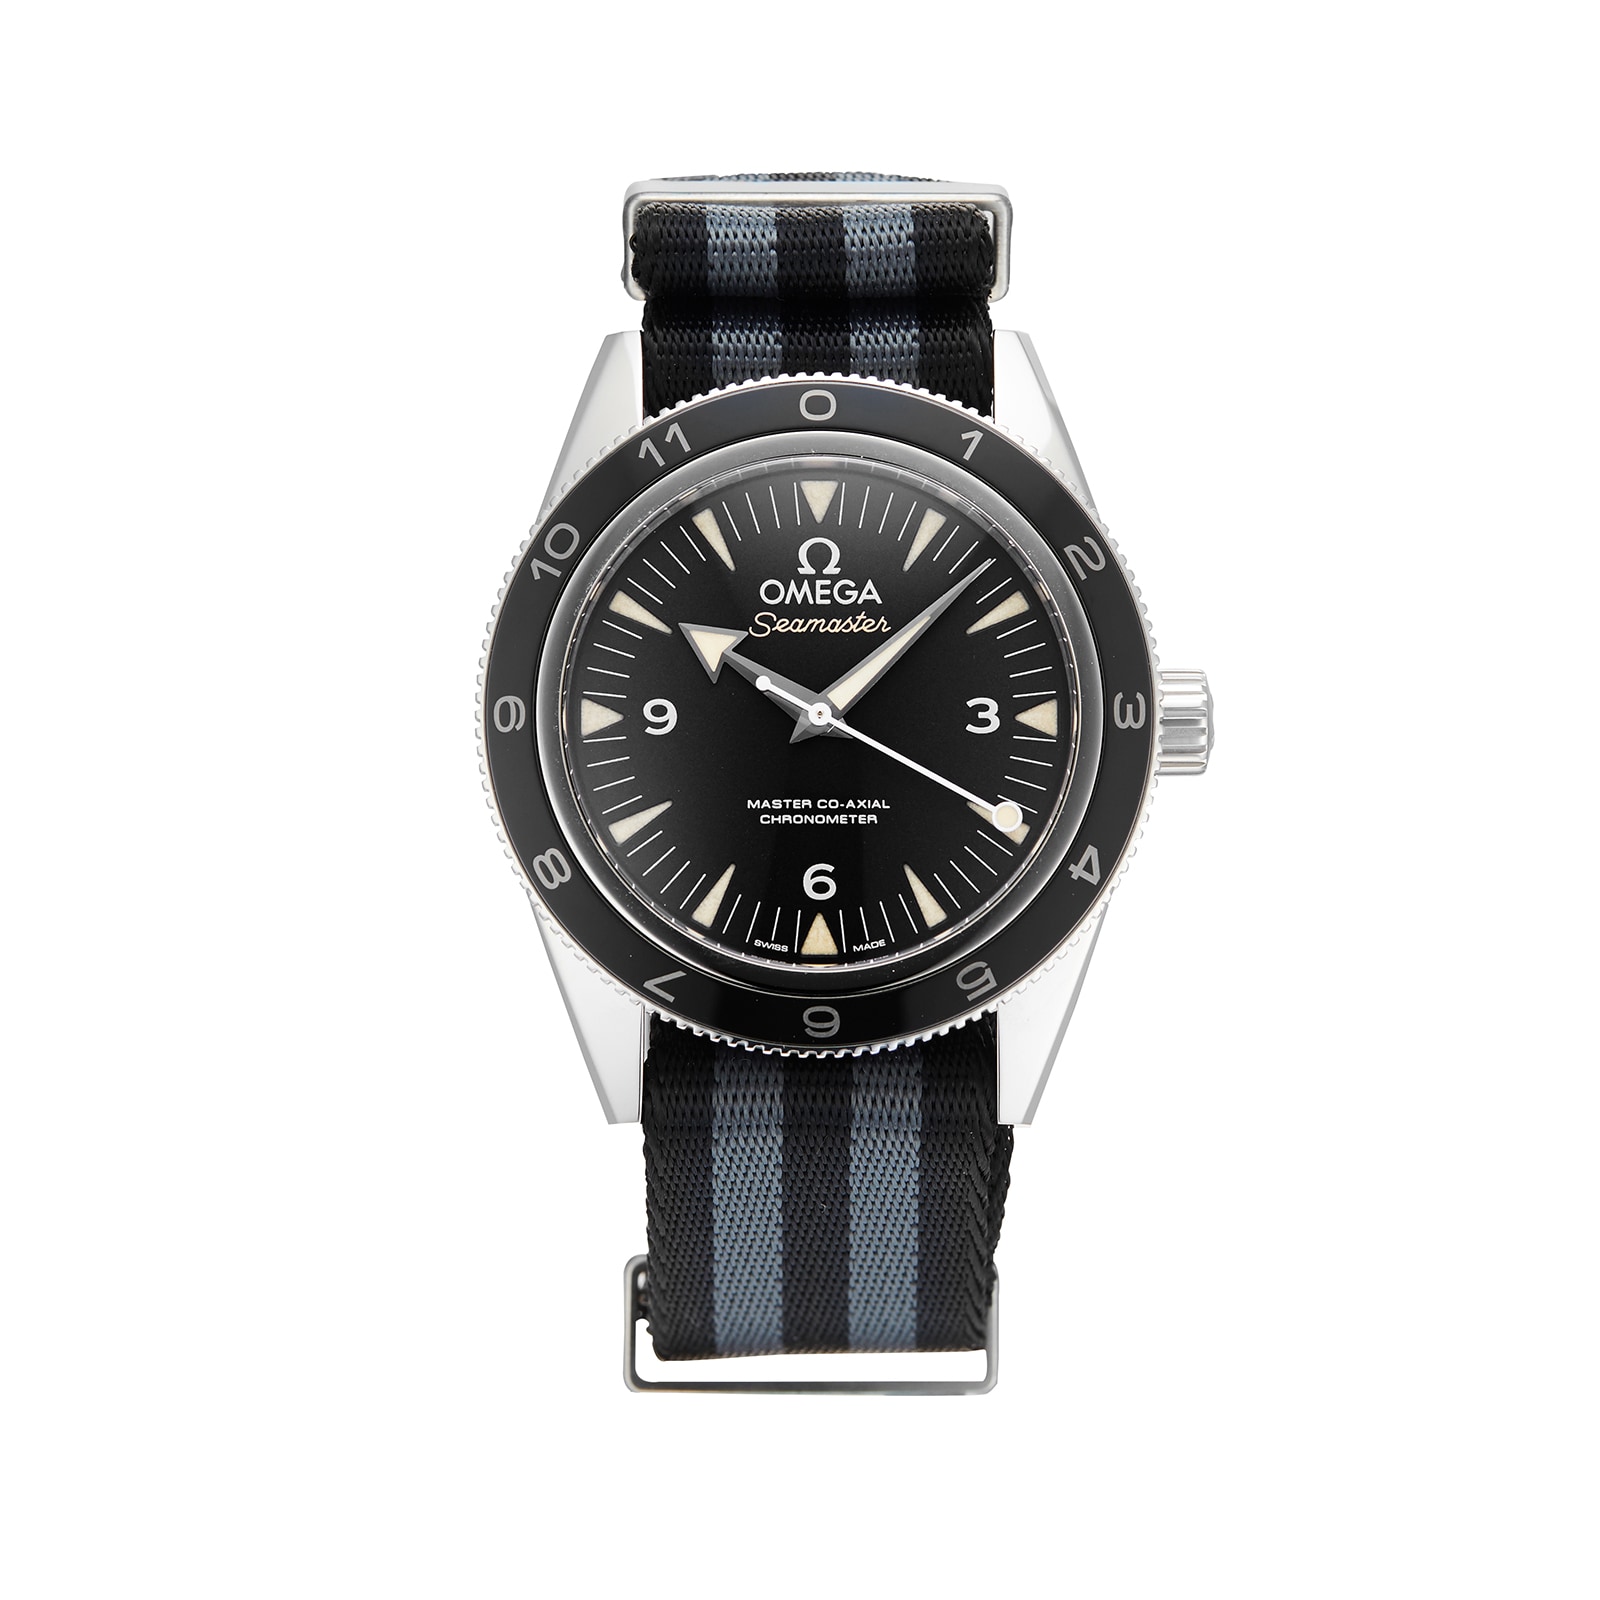 Omega Seamaster James Bond Aqua Terra Spectre Watch | eBay